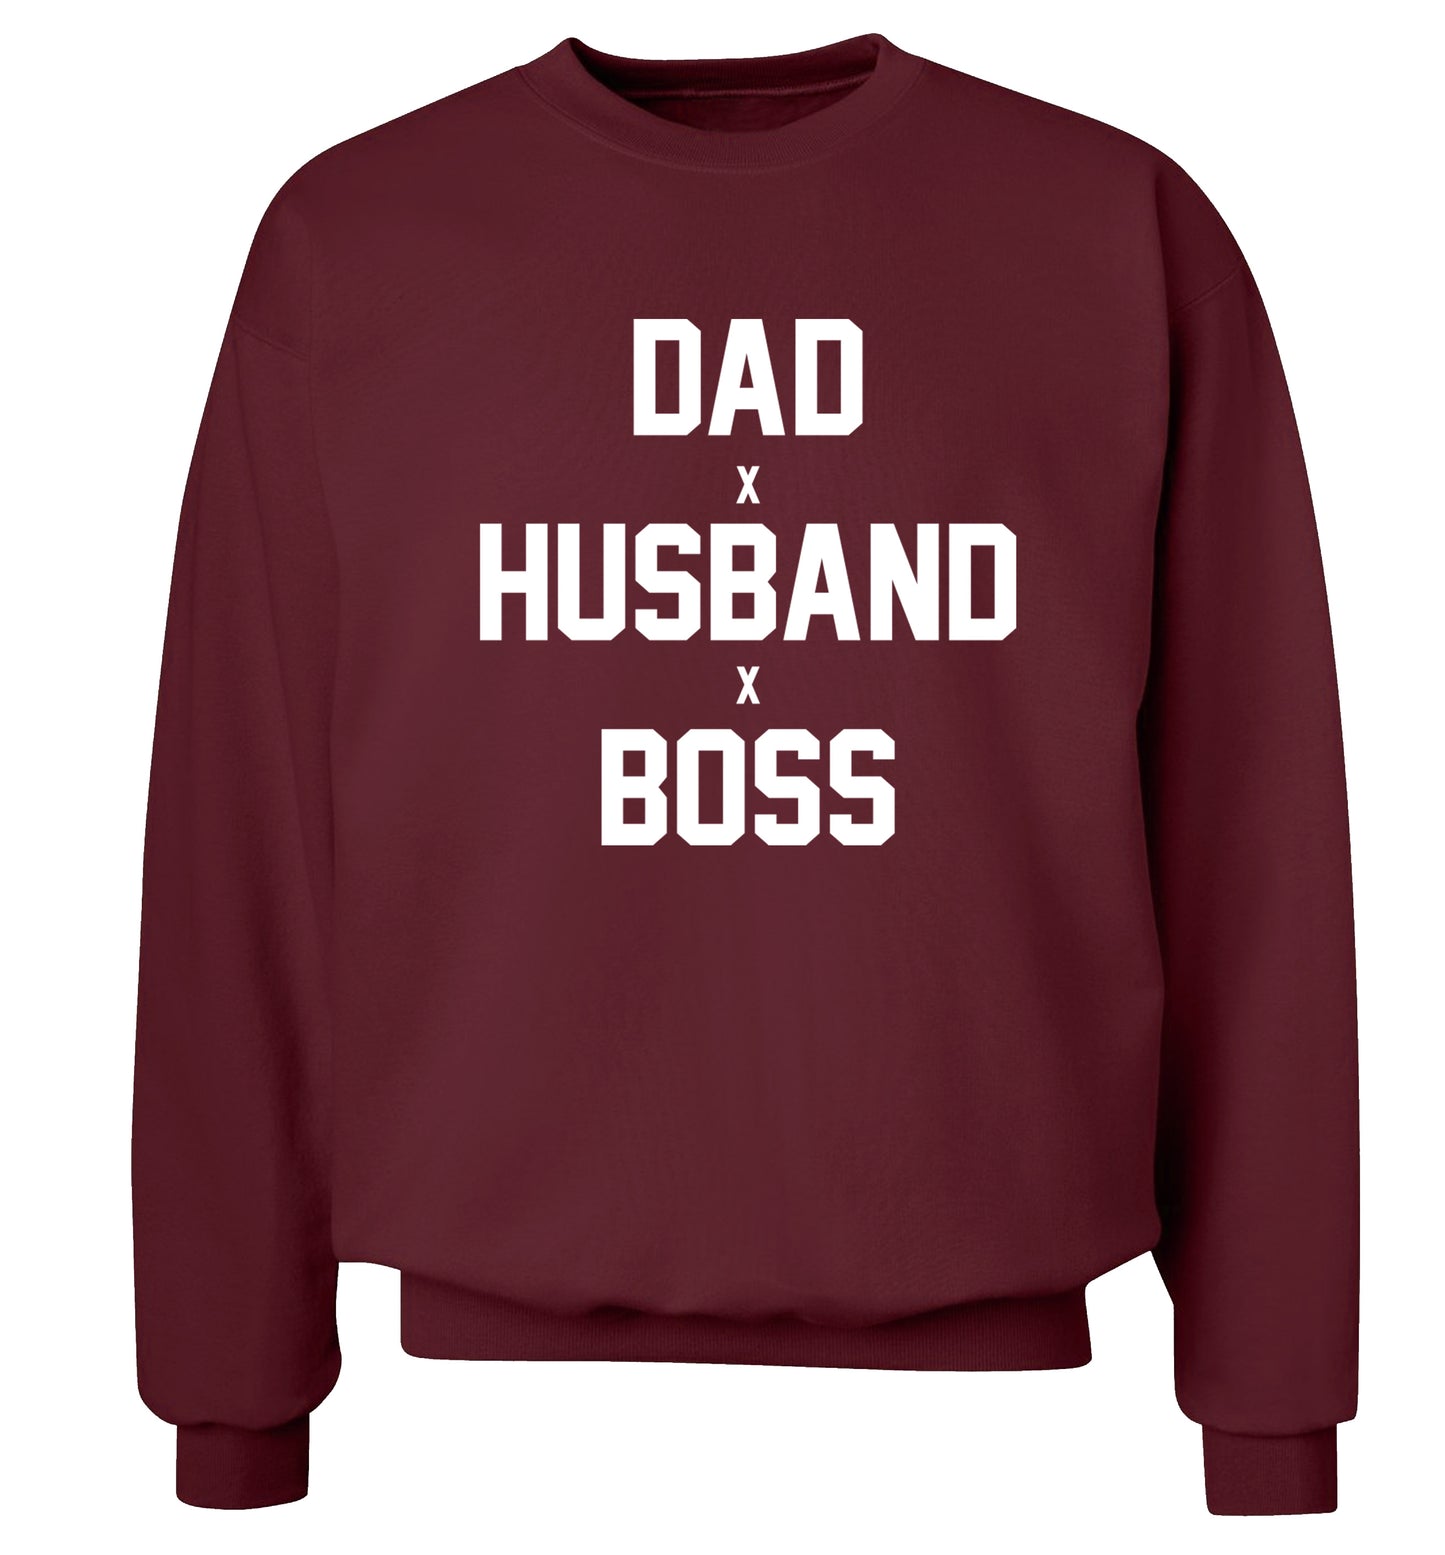 Dad husband boss Adult's unisex maroon Sweater 2XL